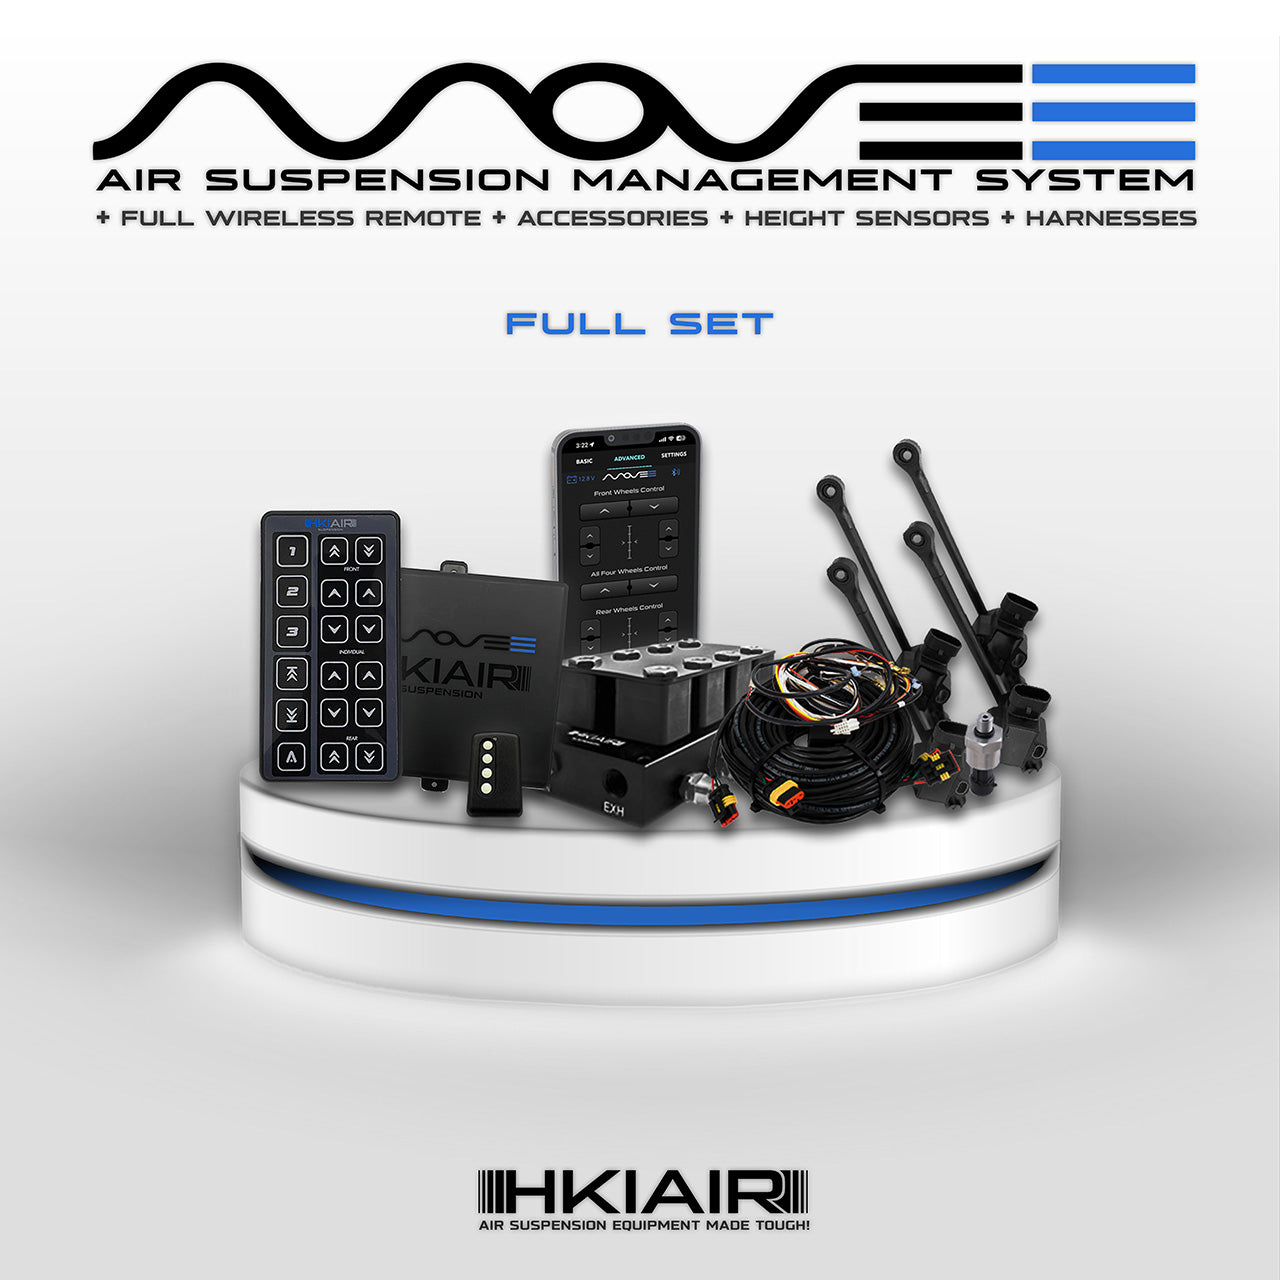 Move-e Bluetooth Air Suspension Management System - Full Set